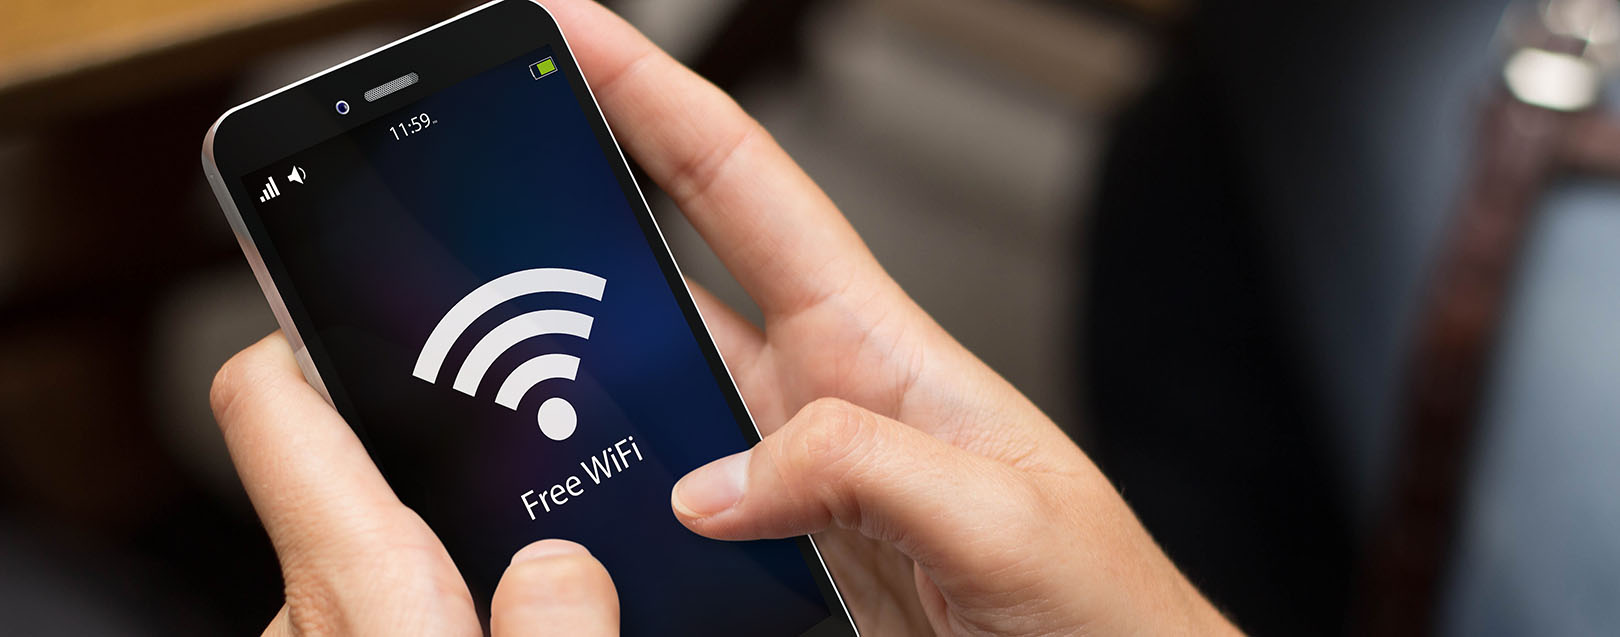 Google announces launch of Wi-Fi service at Guwahati